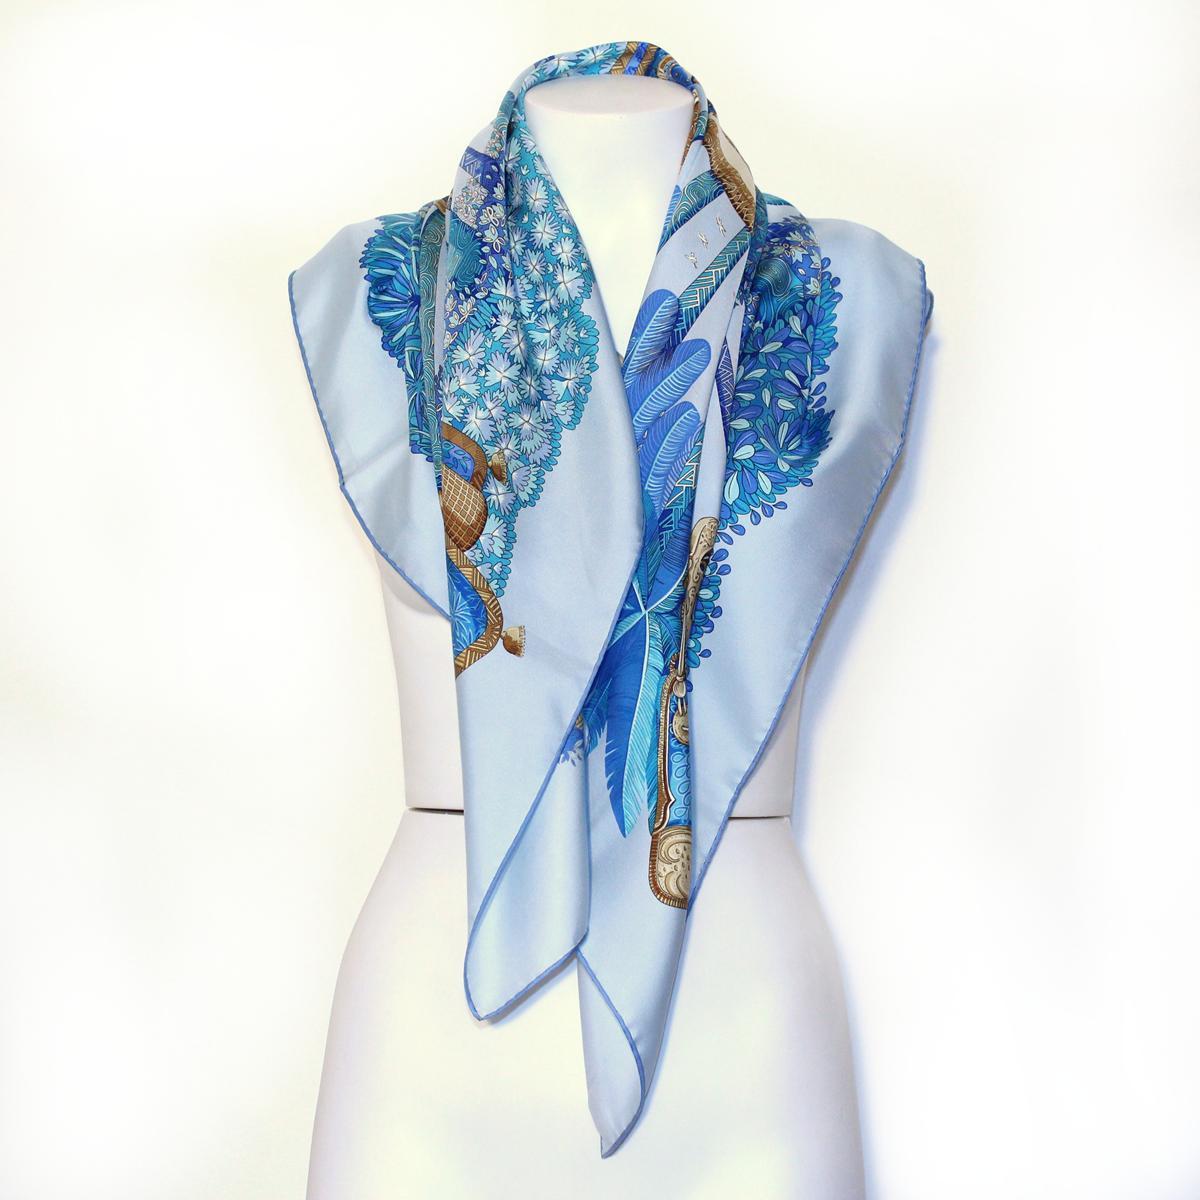 Amazing Hermès scarf
Collectible piece
